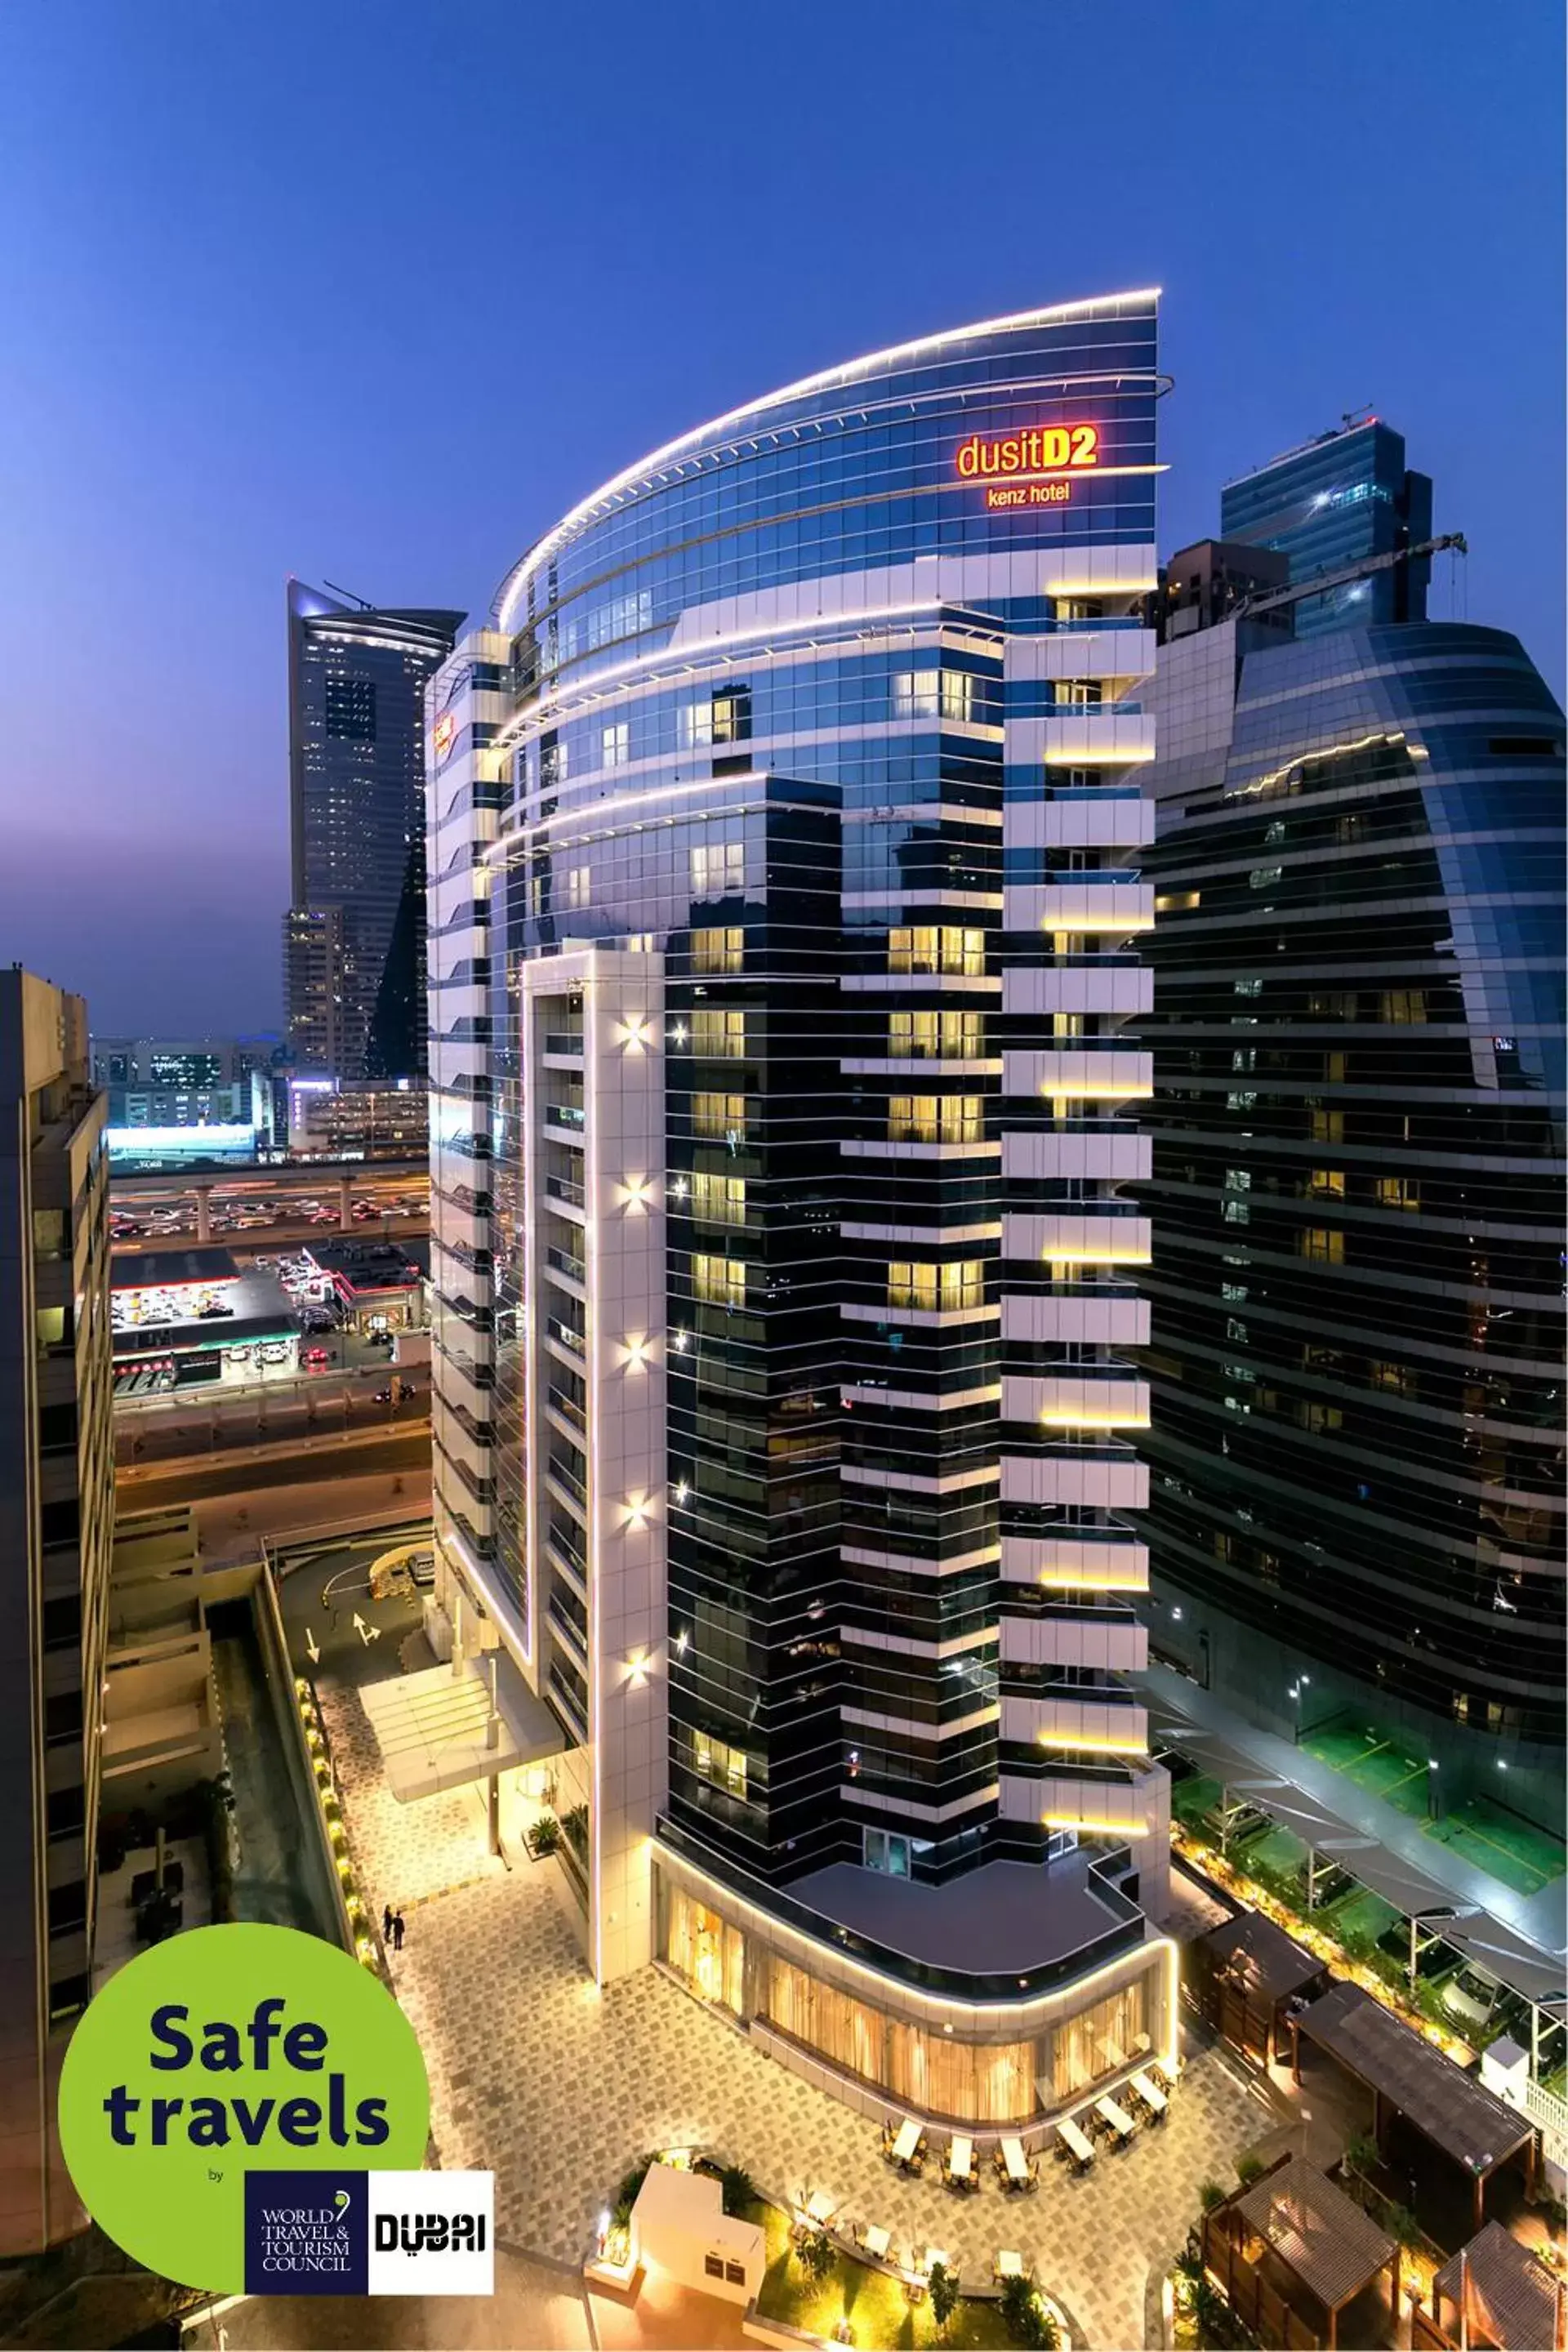 Property building in Dusit D2 Kenz Hotel Dubai